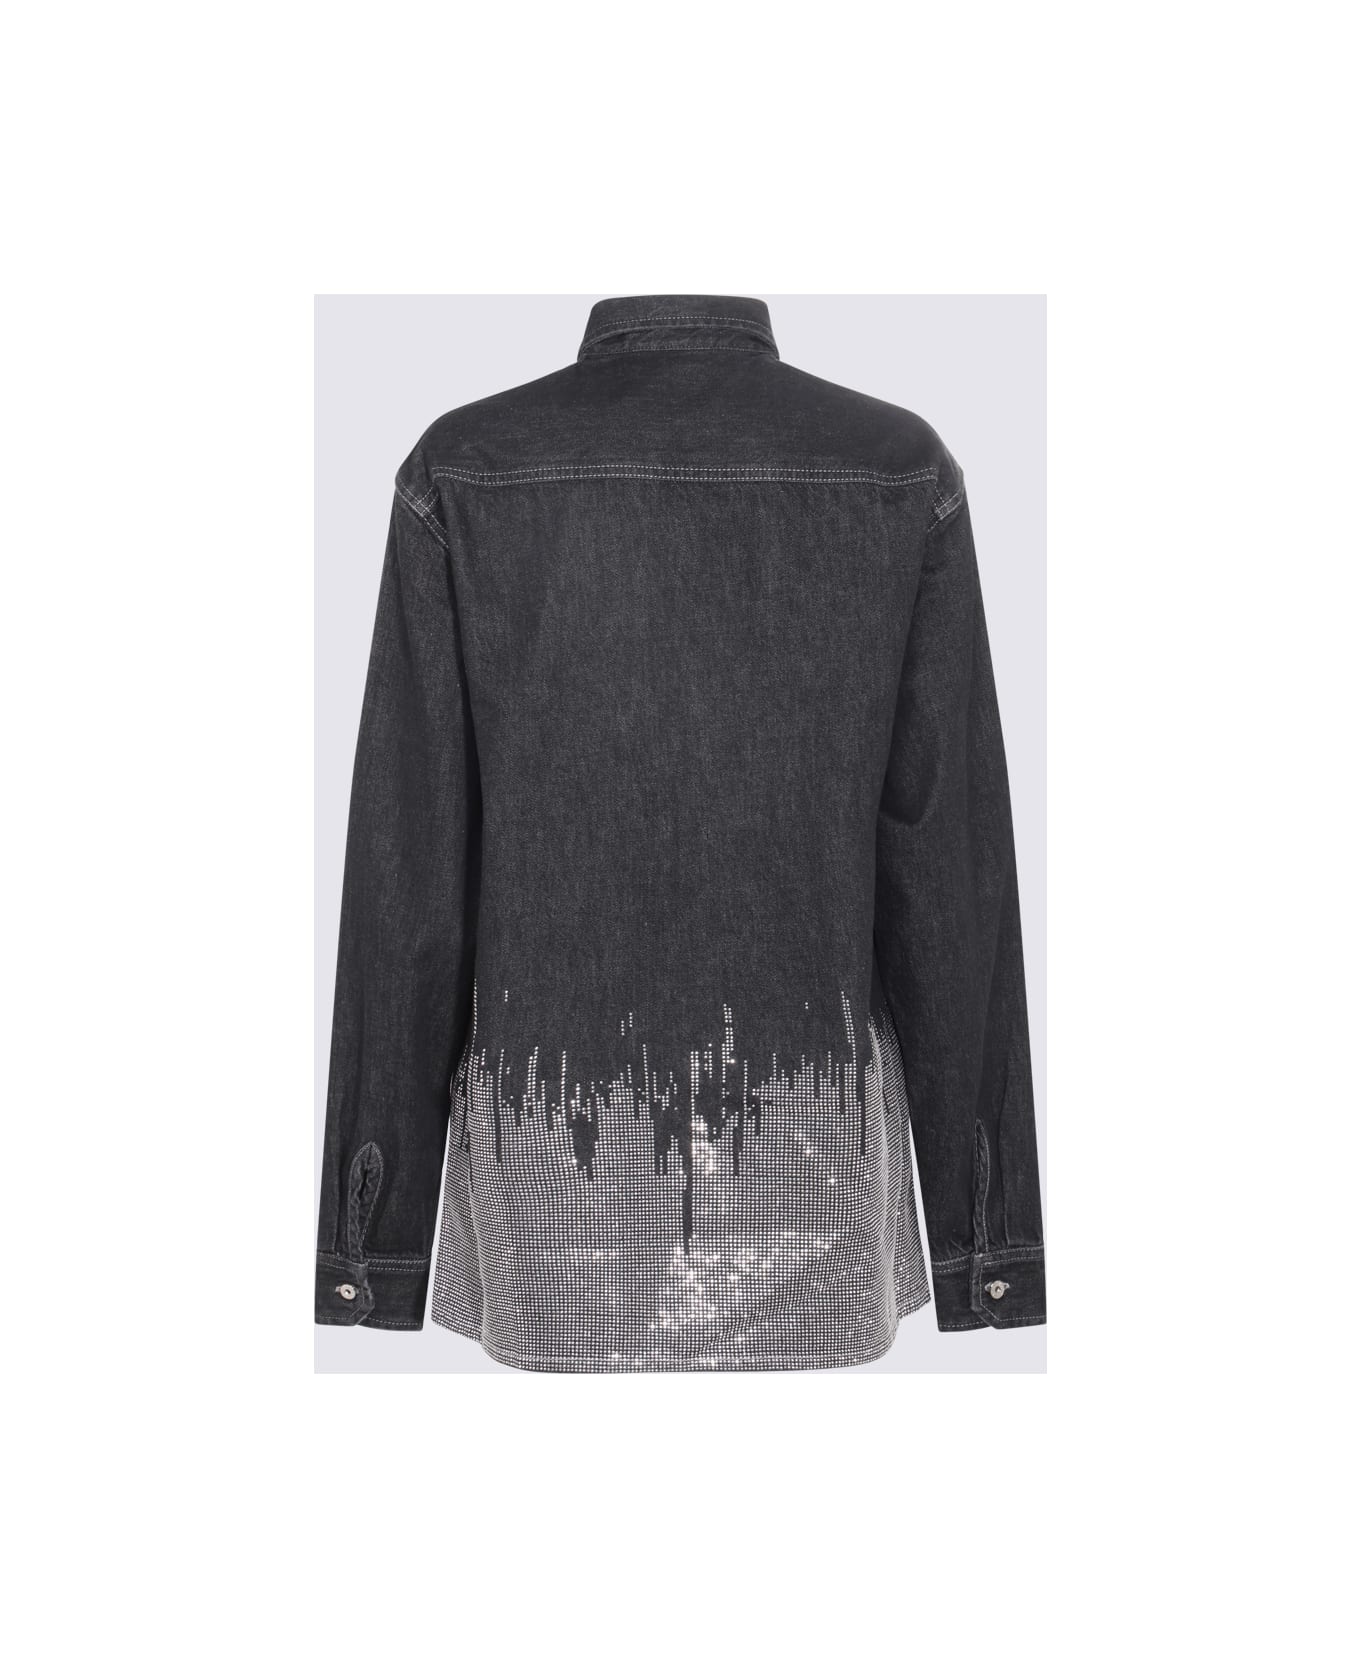 J.W. Anderson Dark Grey Cotton Denim Shirt Jacket - GREY/SILVER